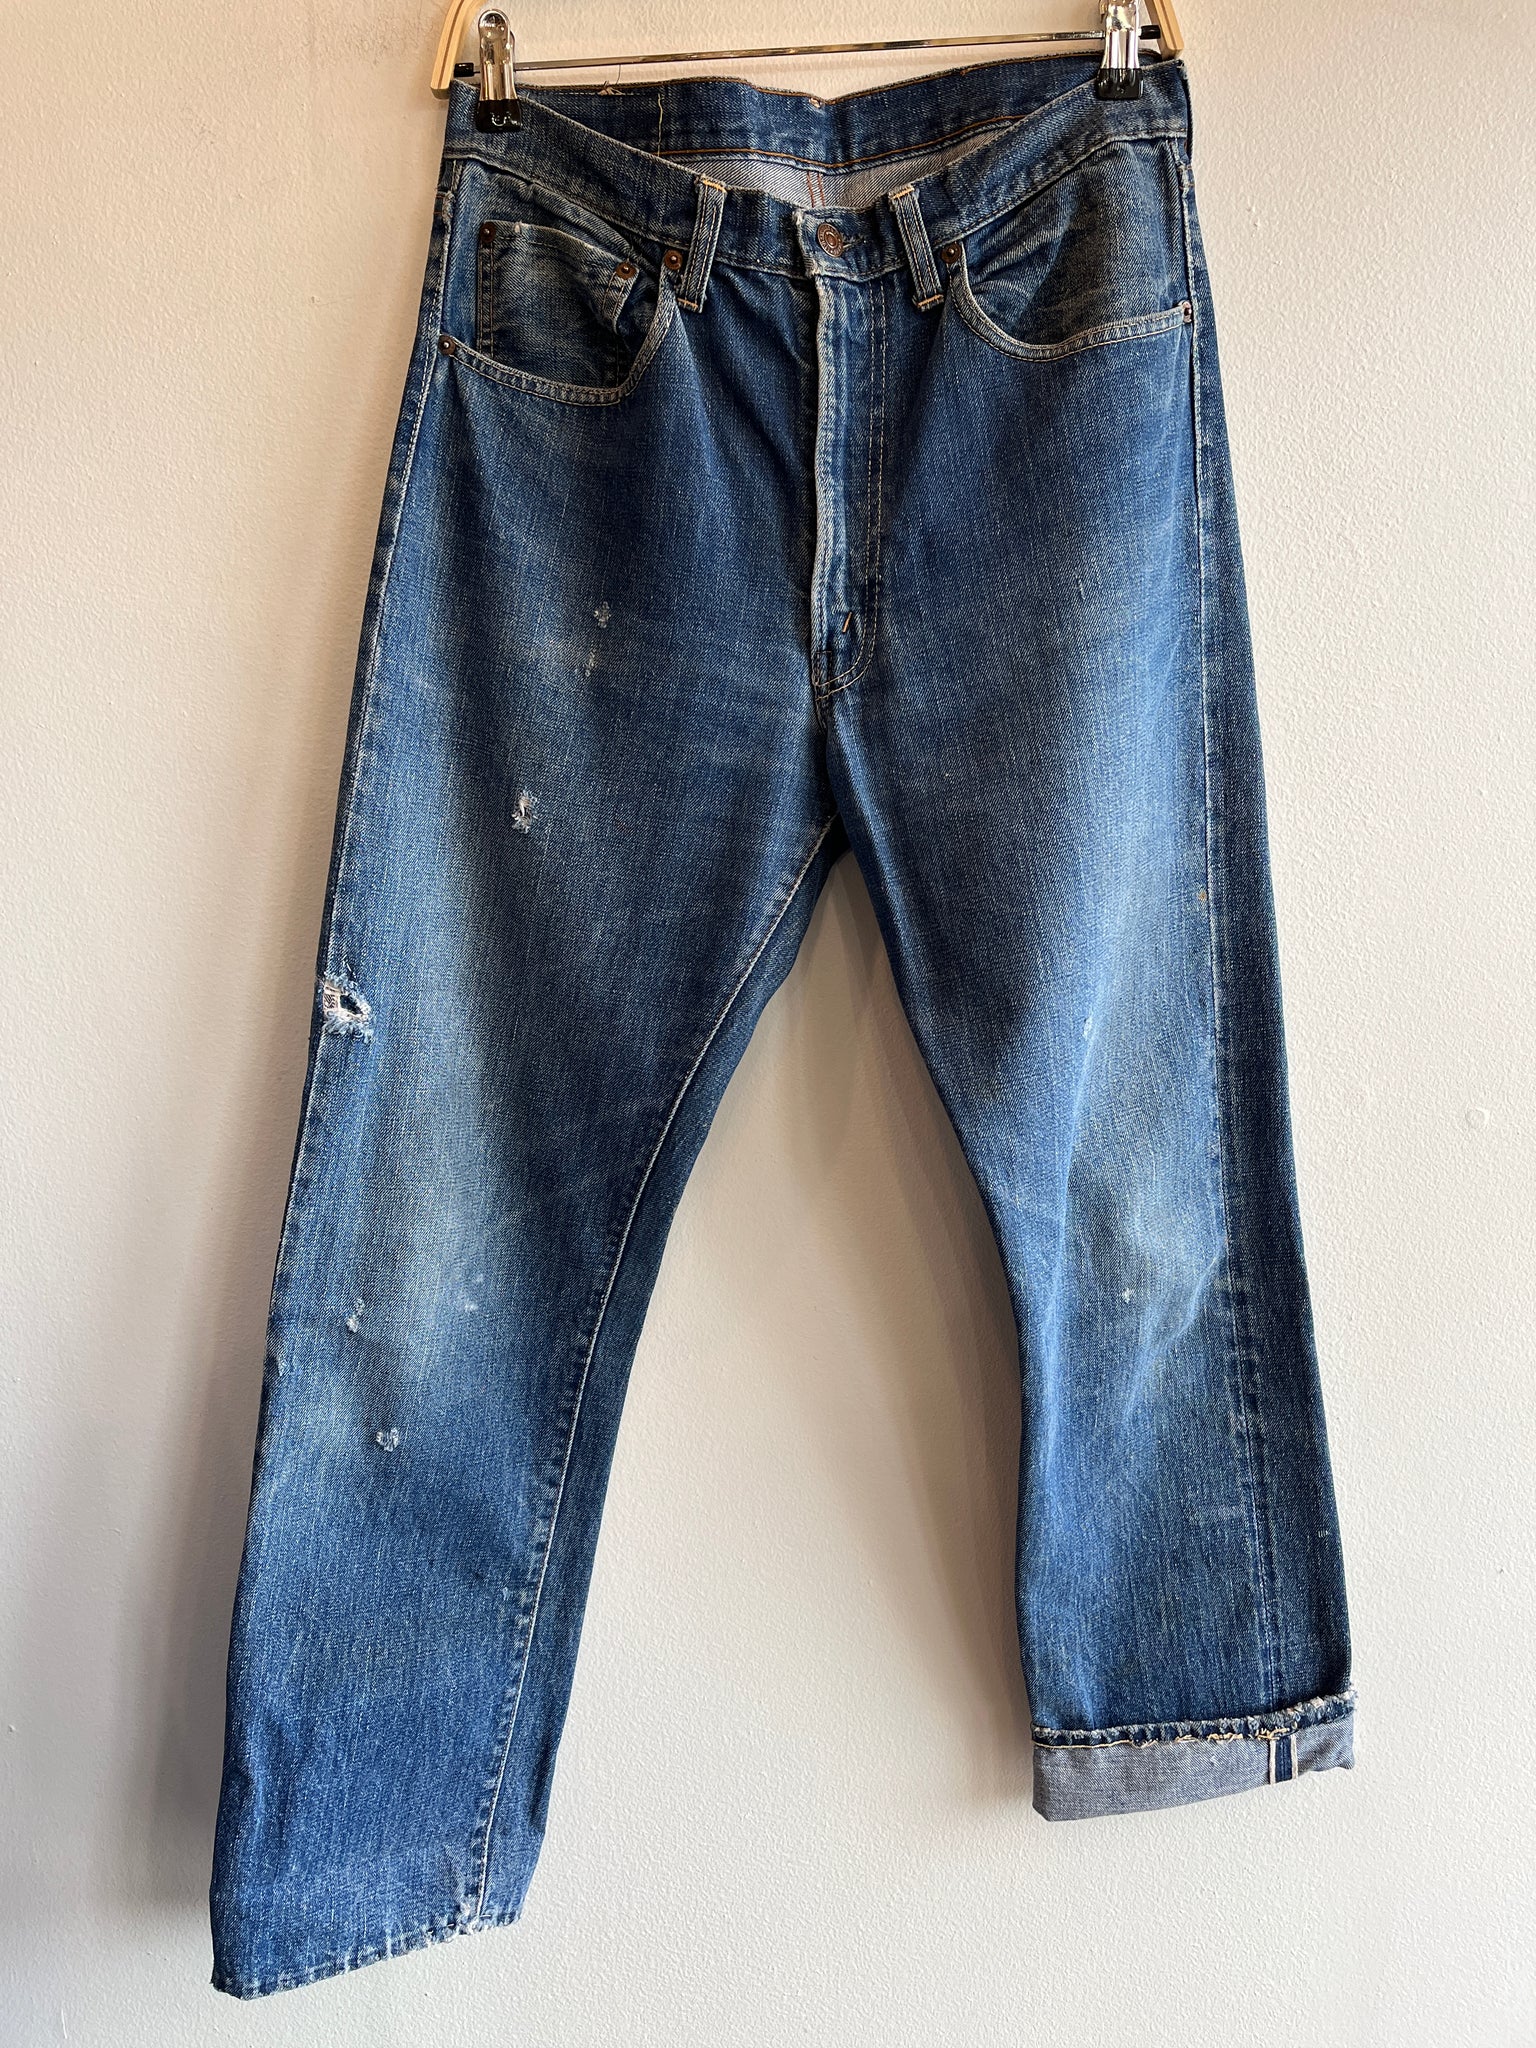 Vintage 1960's Levi's "Big E" 505 Selvedge Denim Jeans